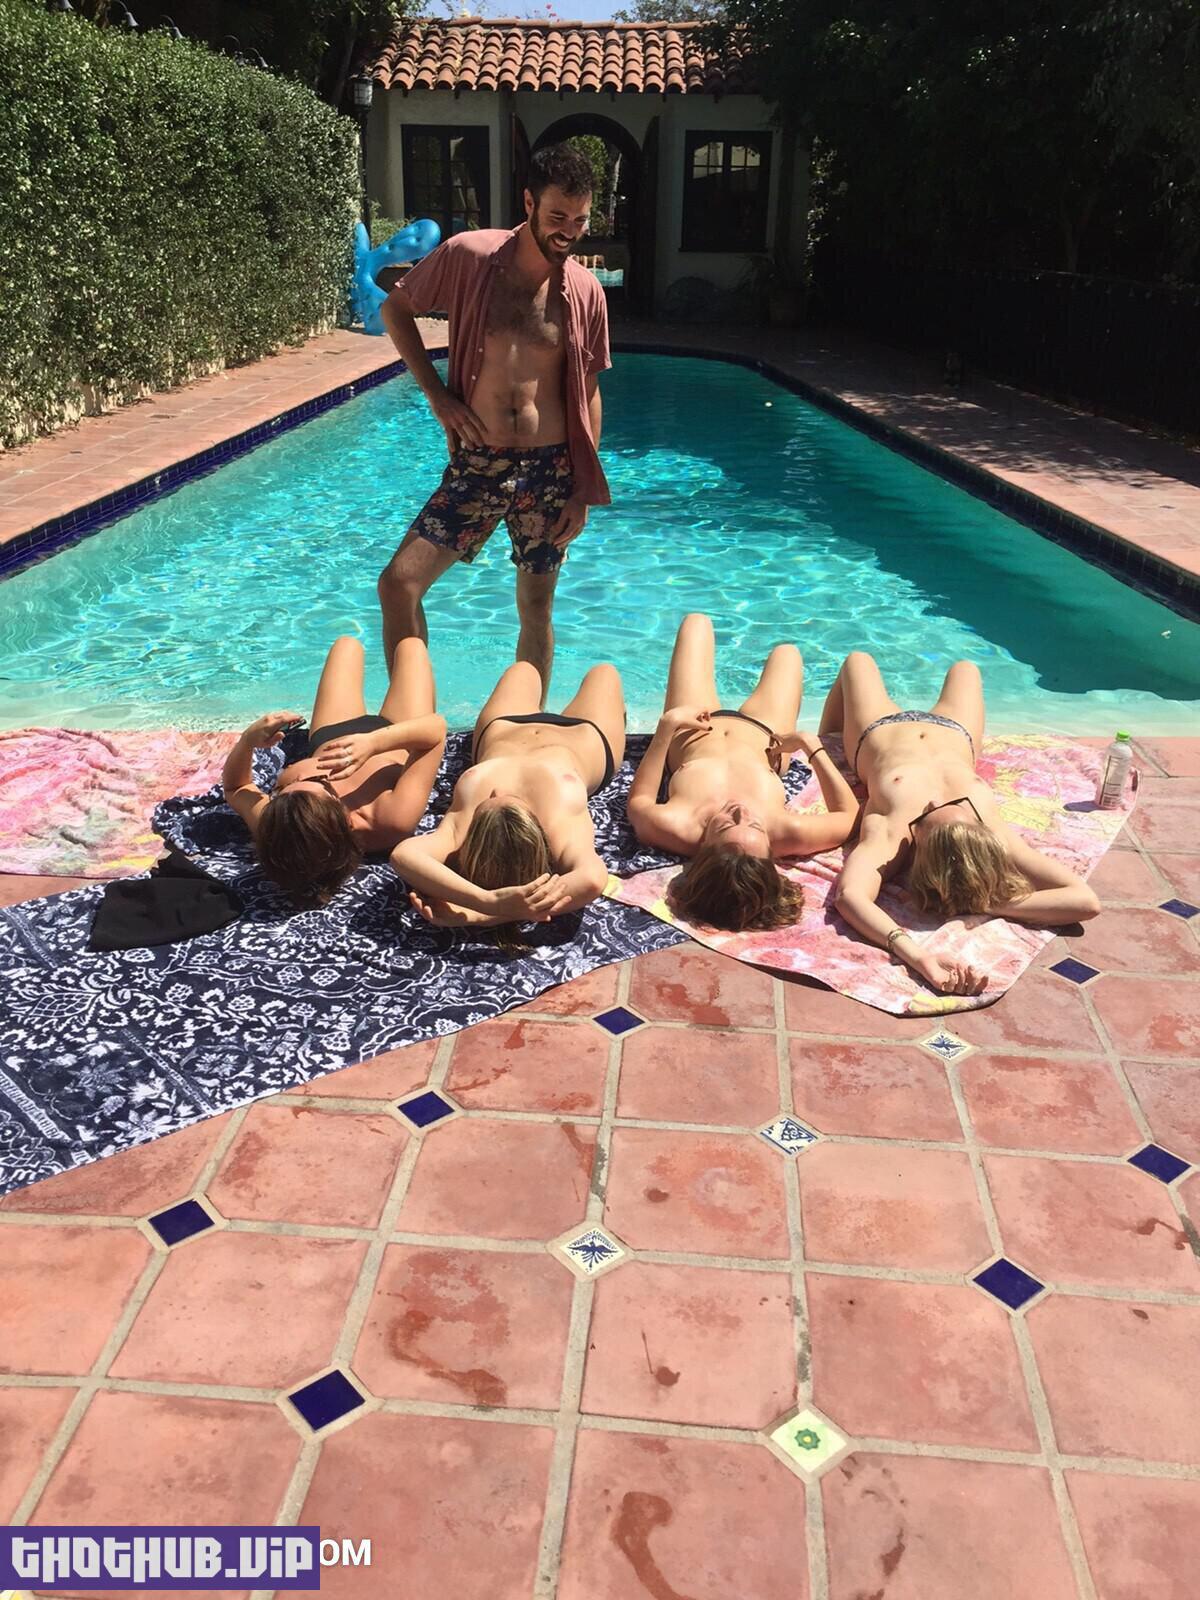 Dakota Johnson Nude Private Photos - Celebs Leaks